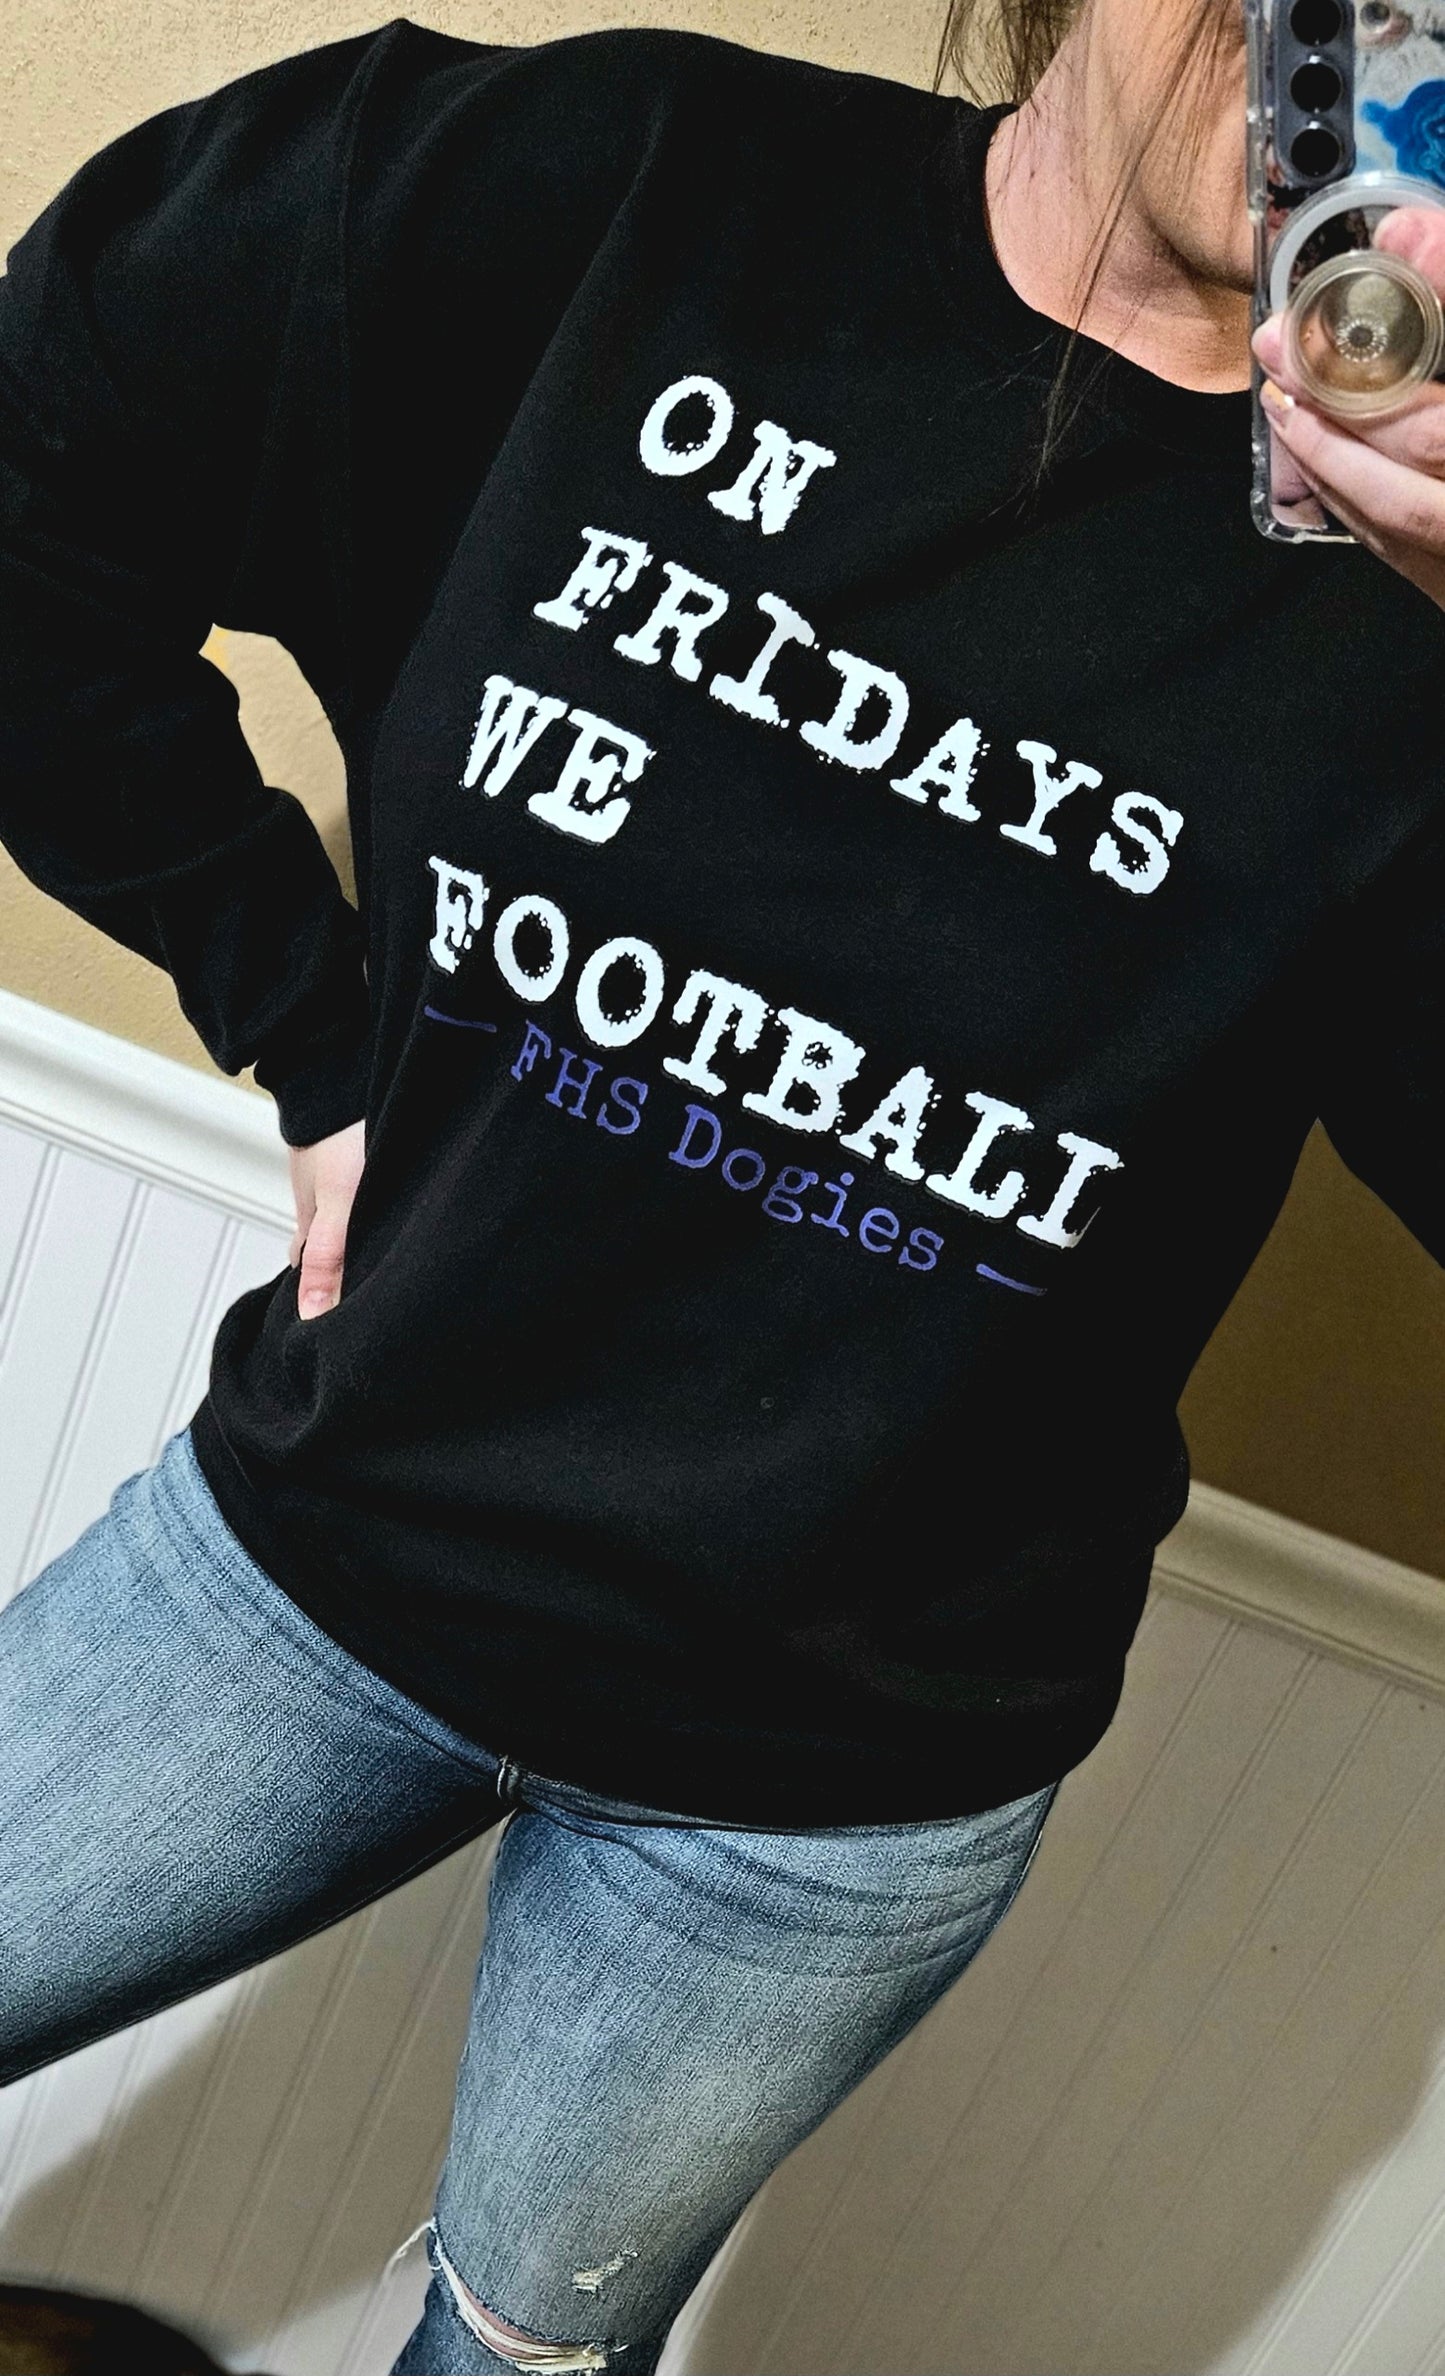 On Fridays We Football